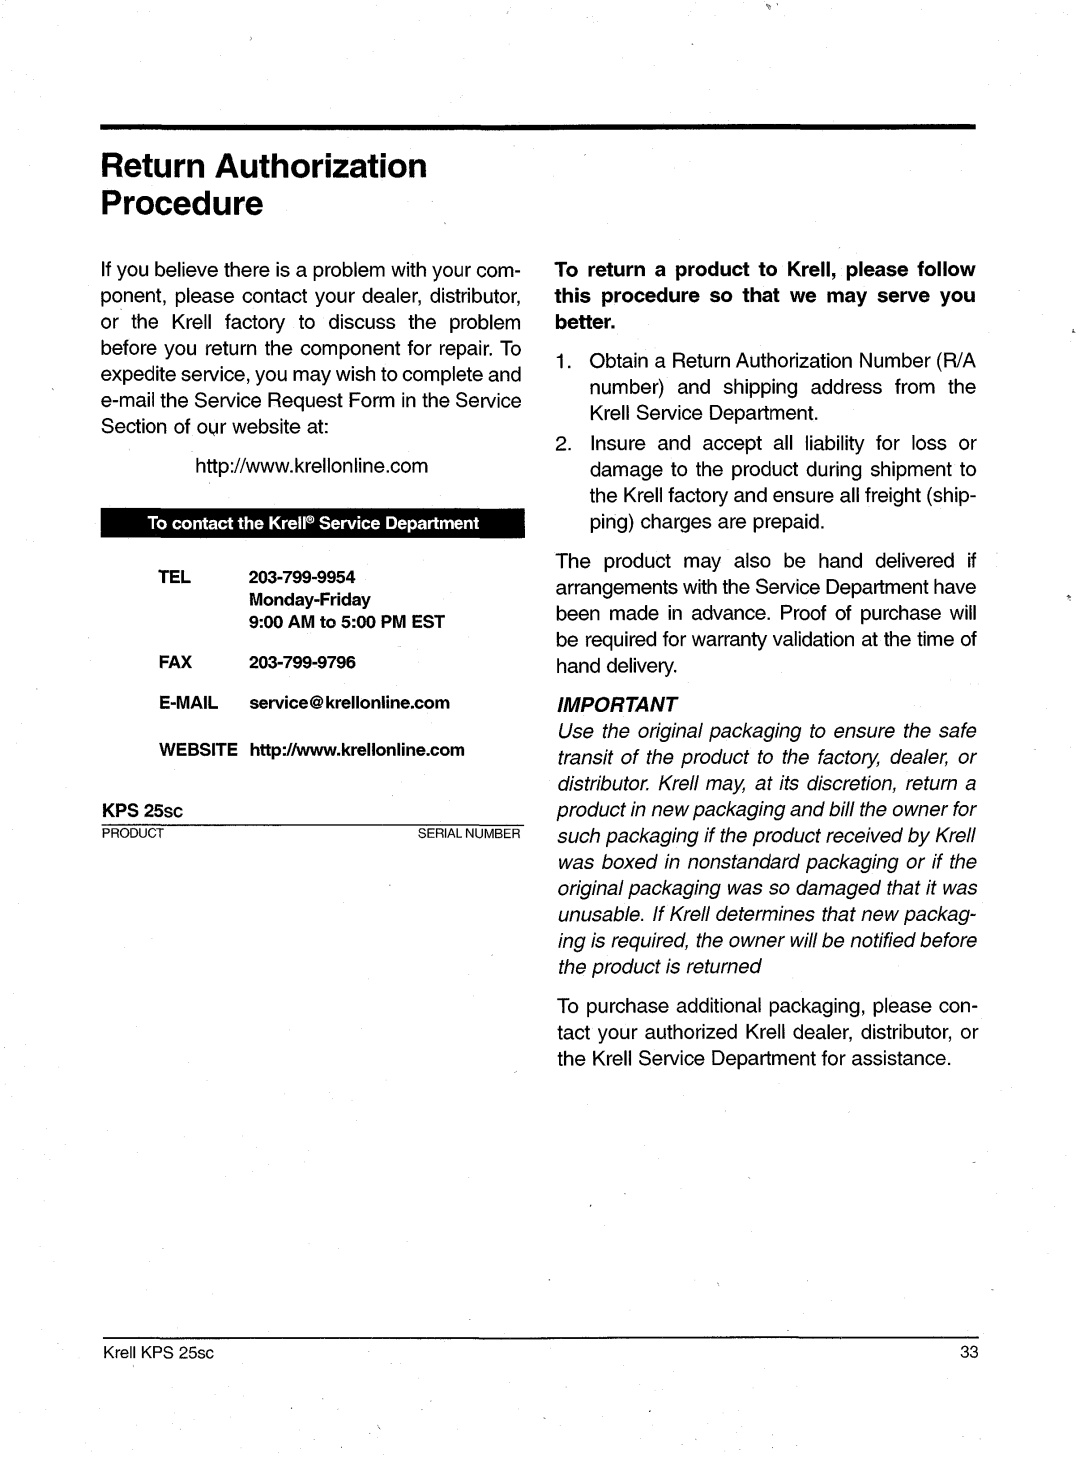 Krell Industries KPS 25sc manual ReturnAuthorization Procedure, Tocontactthe Krell ServiceDe~artment TEL 